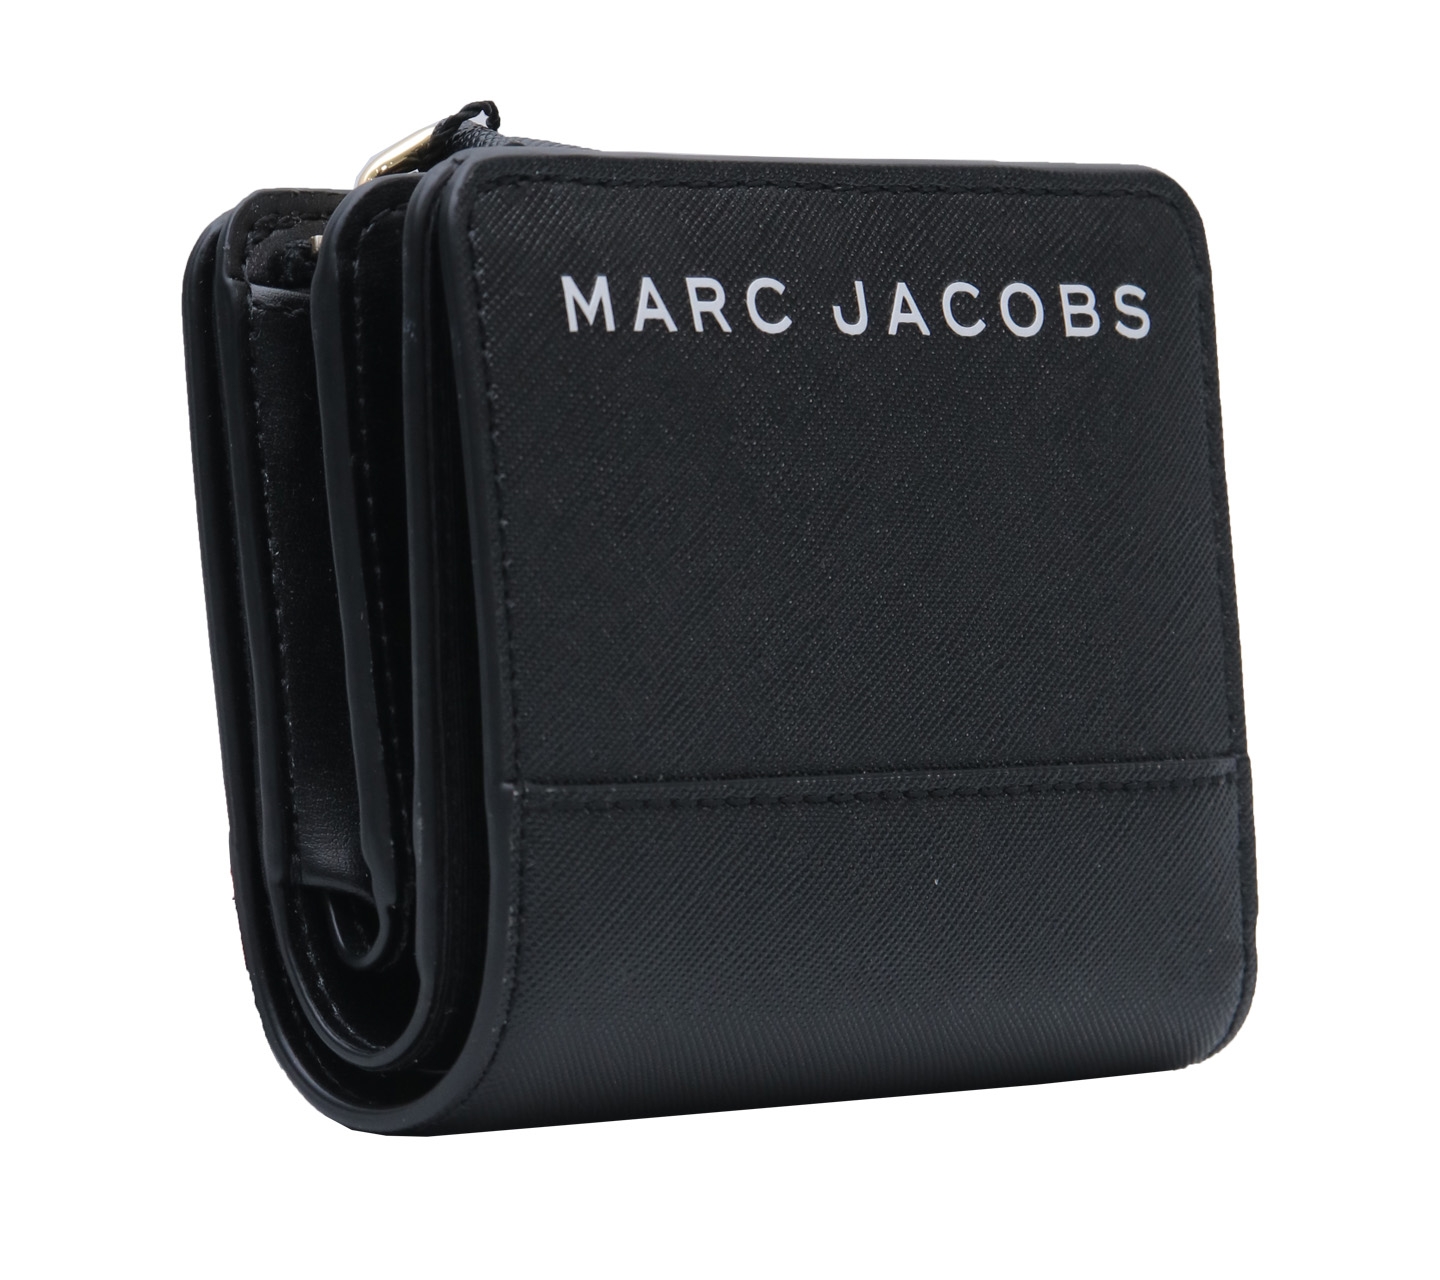 Marc jacobs Black Square Wallet